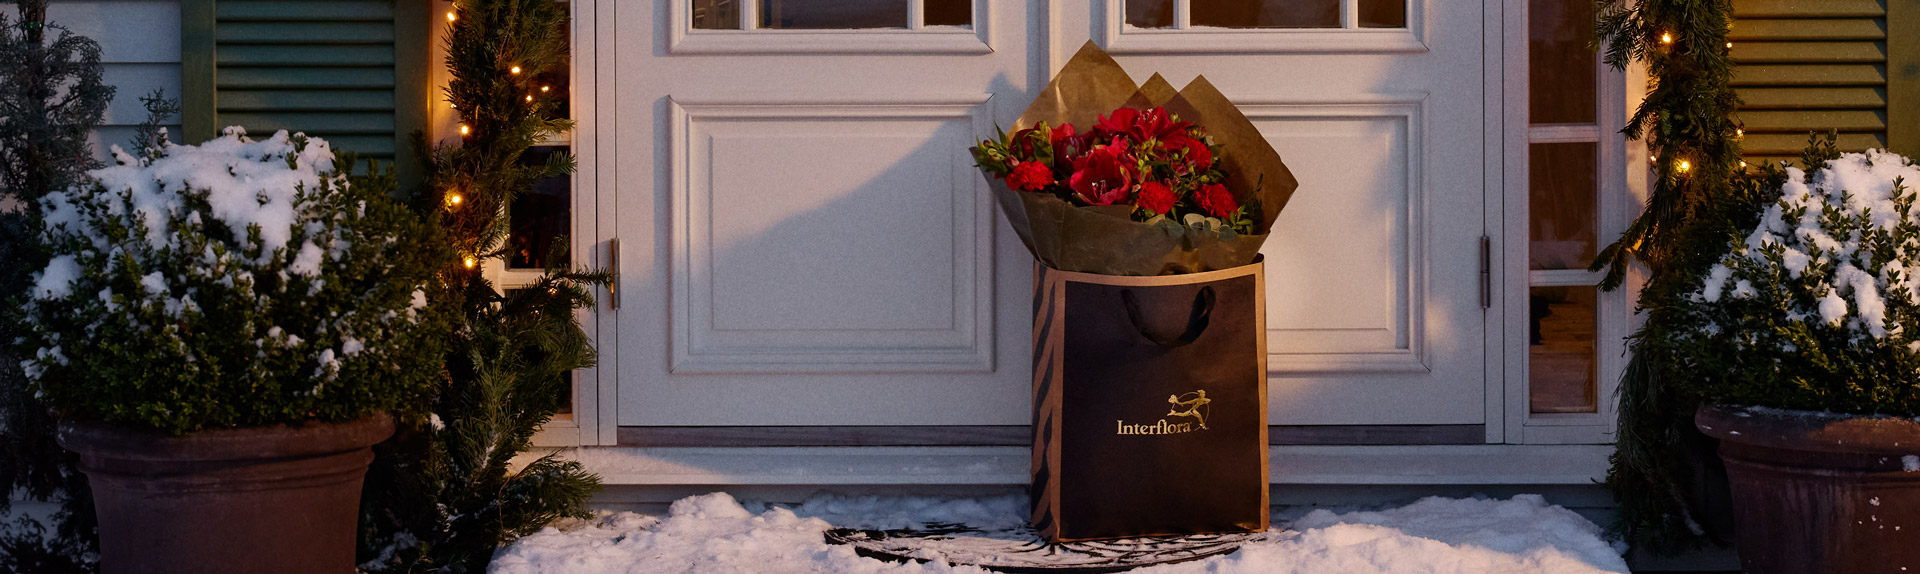 Send flowers in Sweden - Interflora Flower delivery service